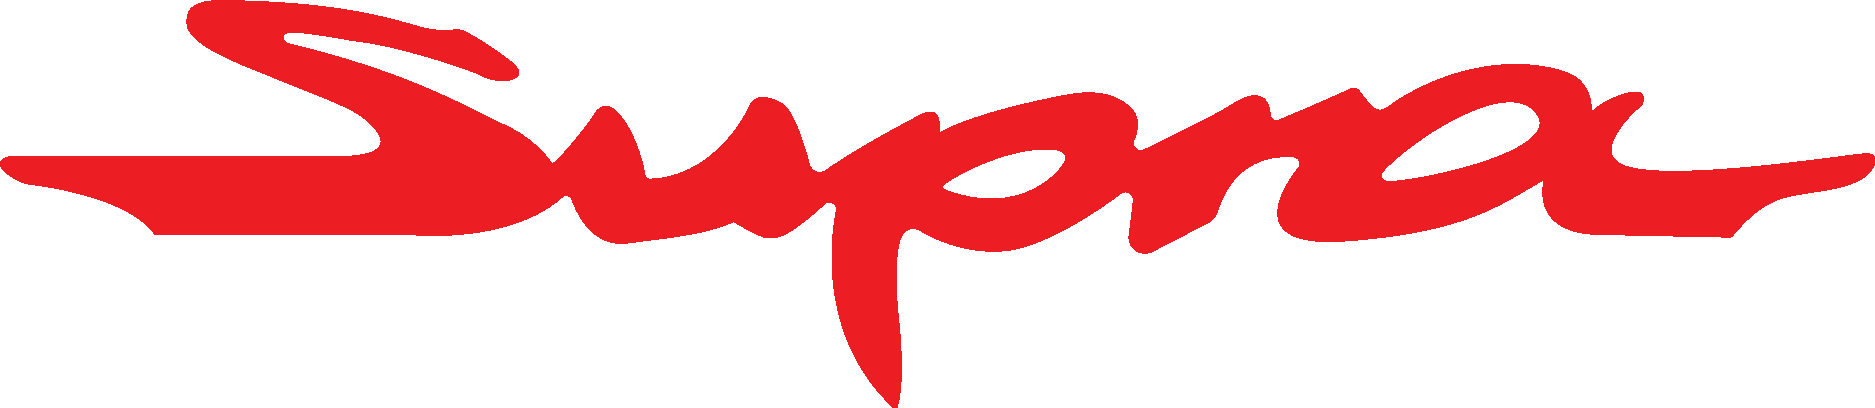 Toyota Supra GR logo - Toyota Supra Gr Logo - Stickers sold by John  Nzwalile | SKU 12497653 | 25% OFF Printerval